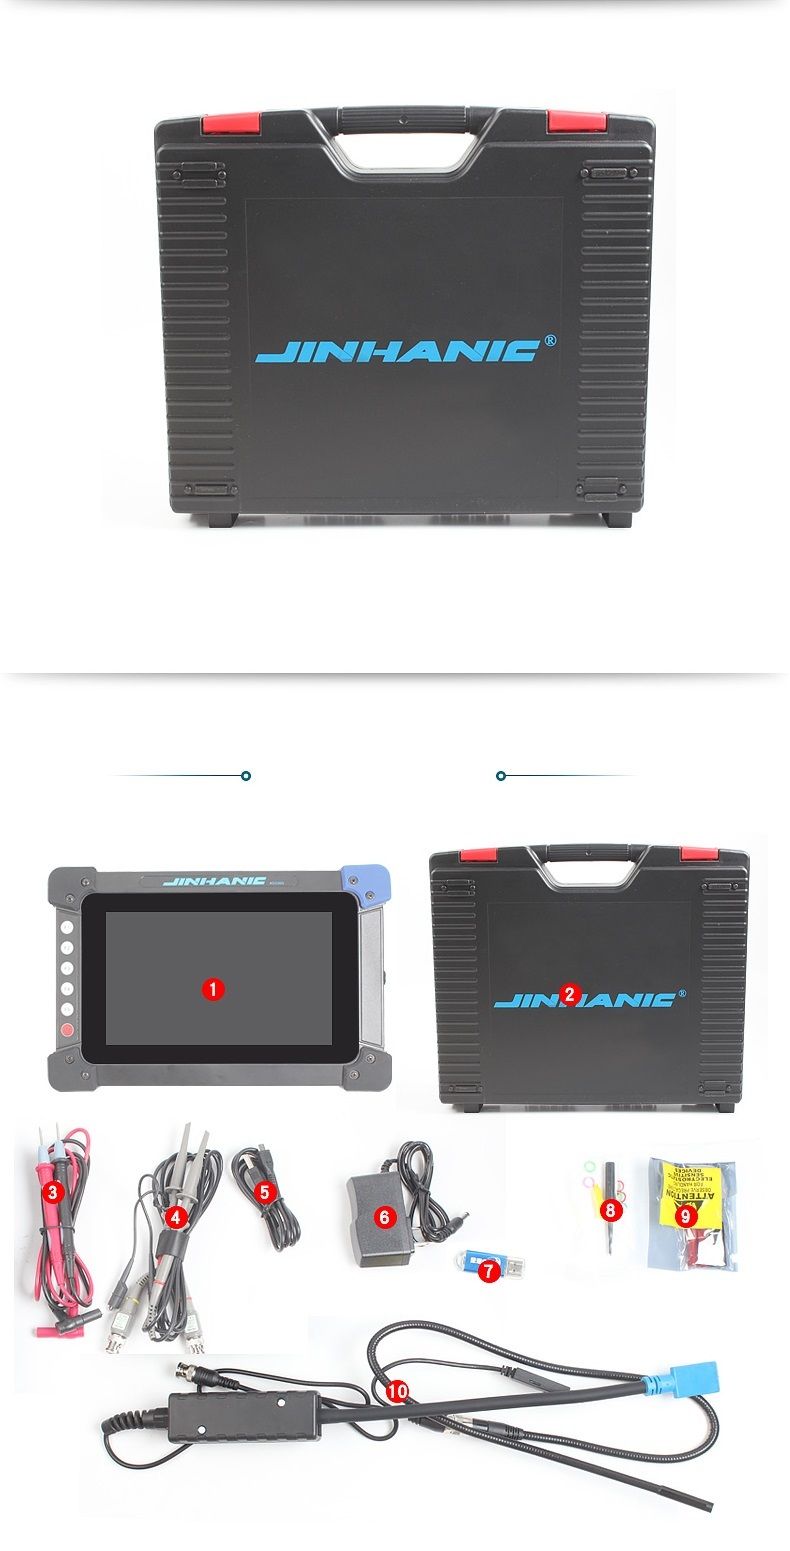 ADO202-Handheld-Digital-Storage-Oscilloscope-2-Channel-Probe-7-Inch-Touch-Screen-20MHz-Bandwidth-Dig-1764475